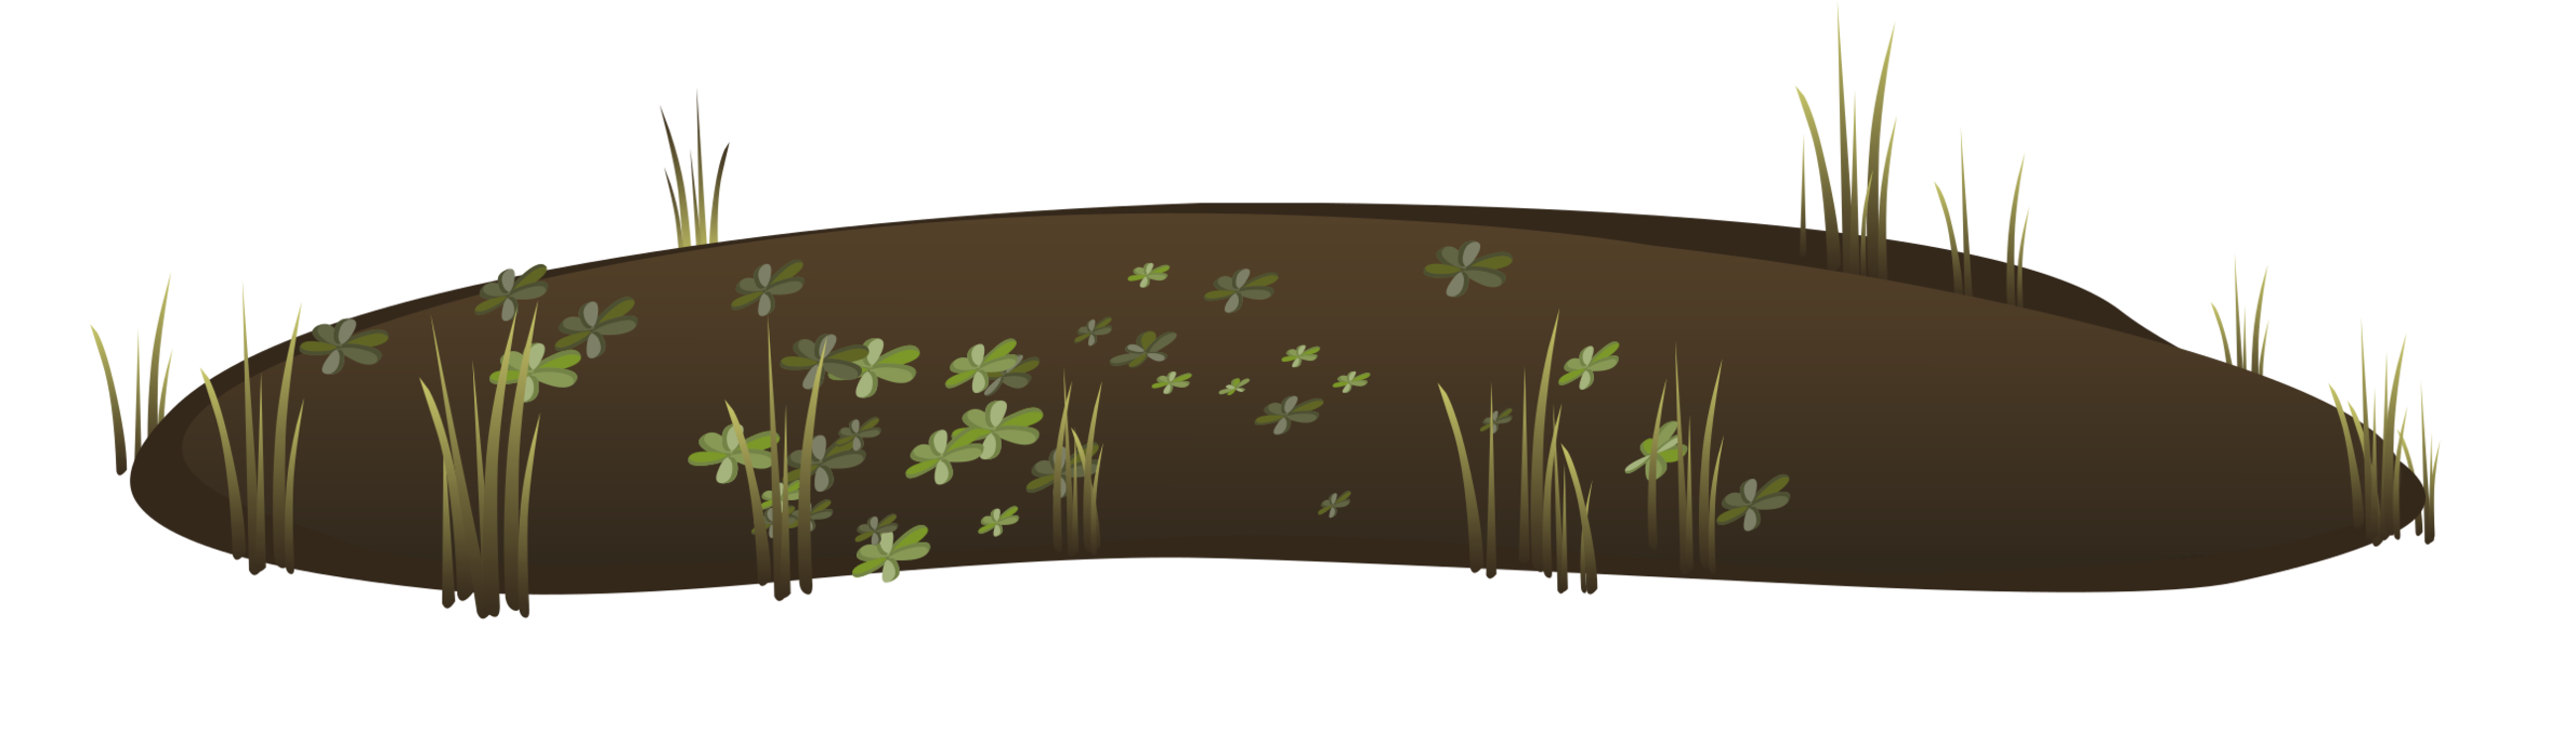 Grass,Leaf,Peat